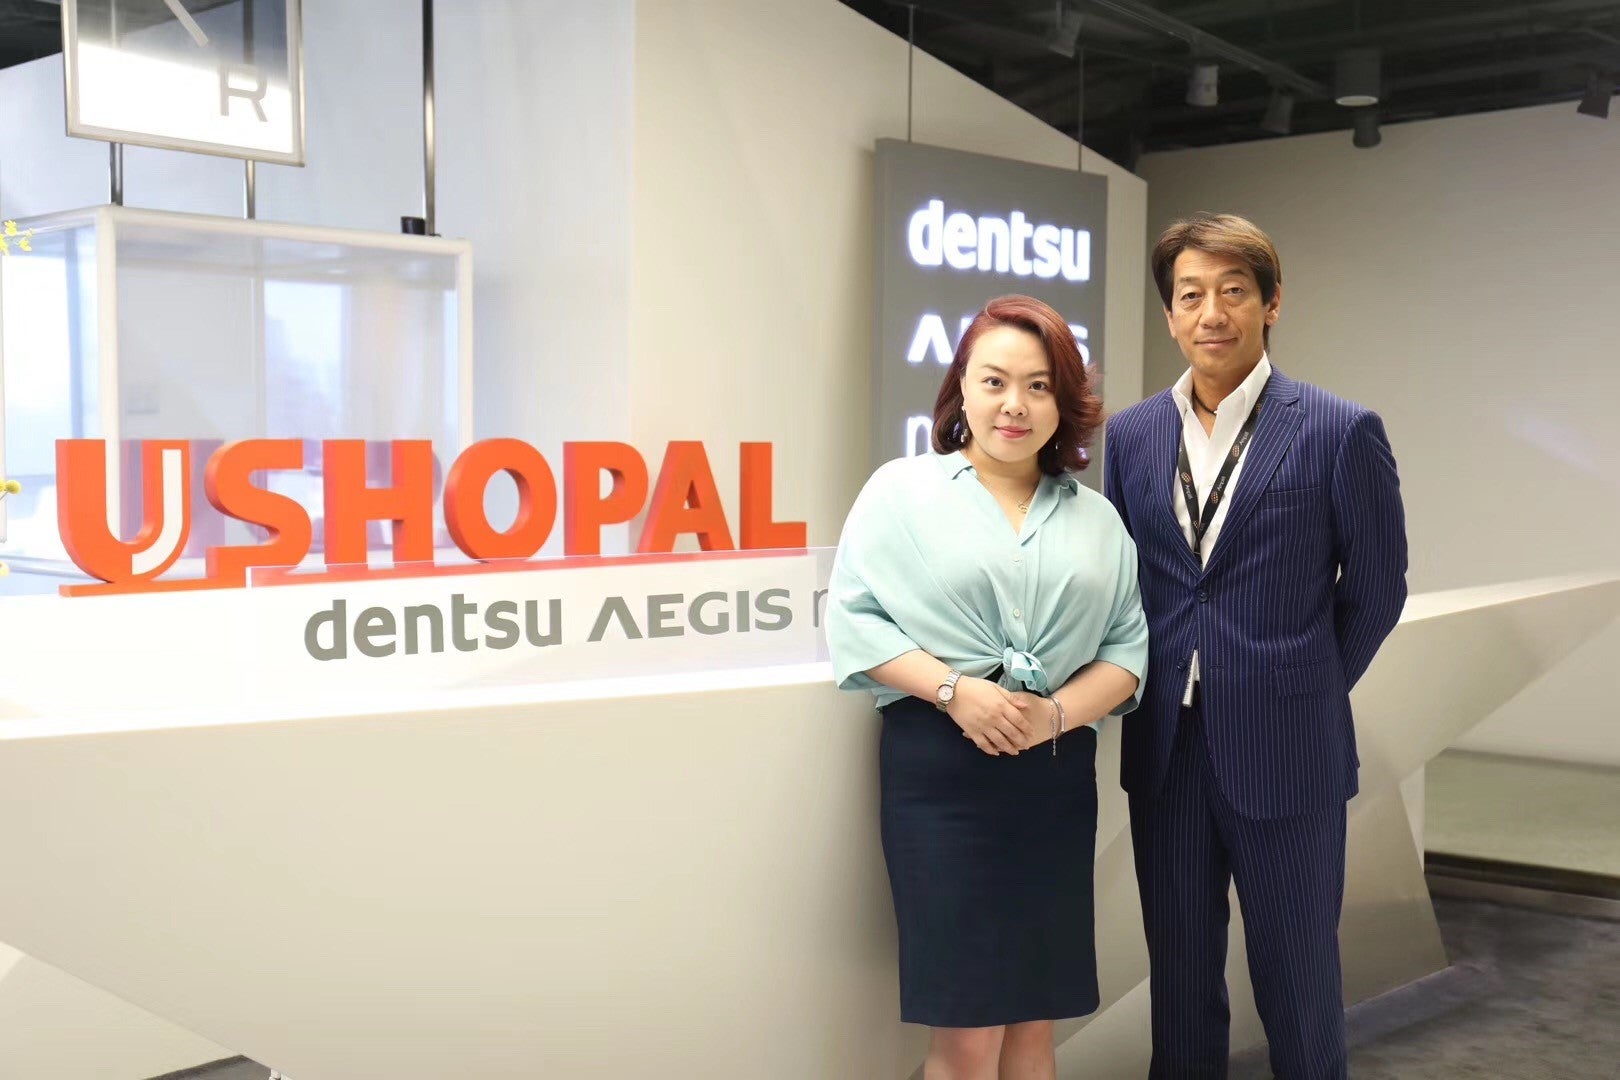 Global Advertising Giant Dentsu Unveils Group-Wide Strategic Partnership with USHOPAL